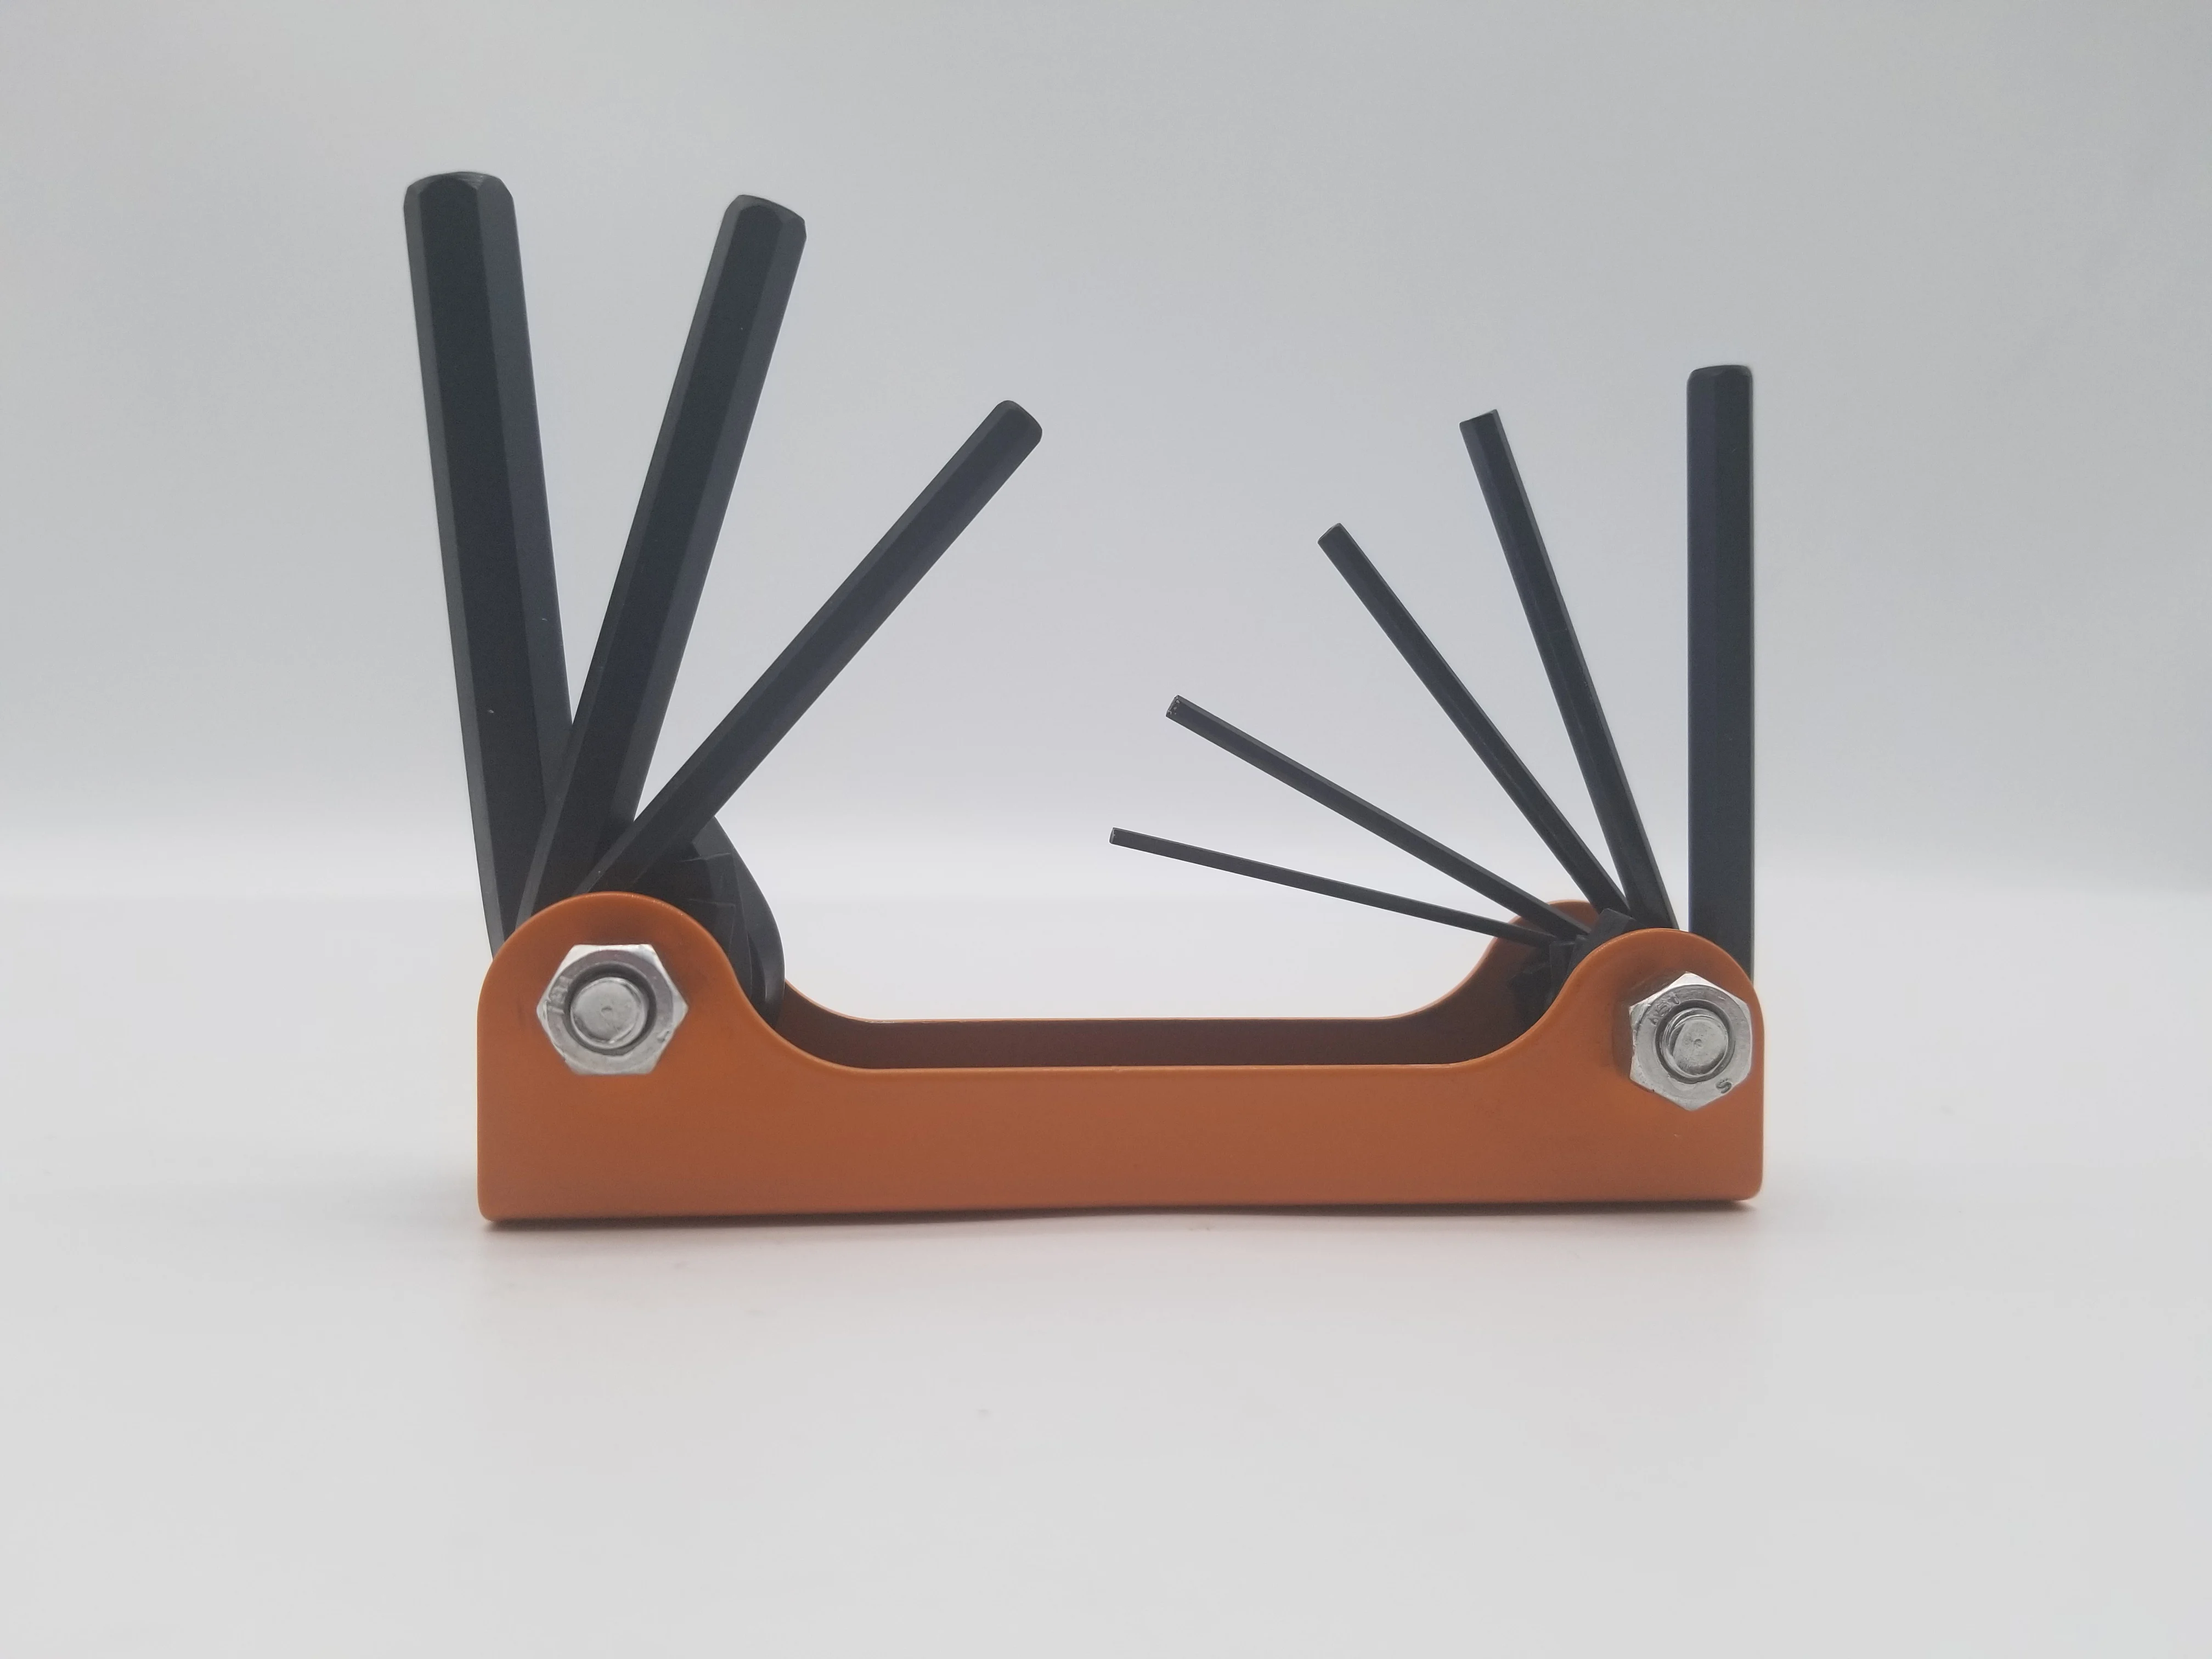 6mm Bicycle Bike Repair Kit 8Pcs CR-V Fold-Up Hex Wrench Key Set 1.5mm